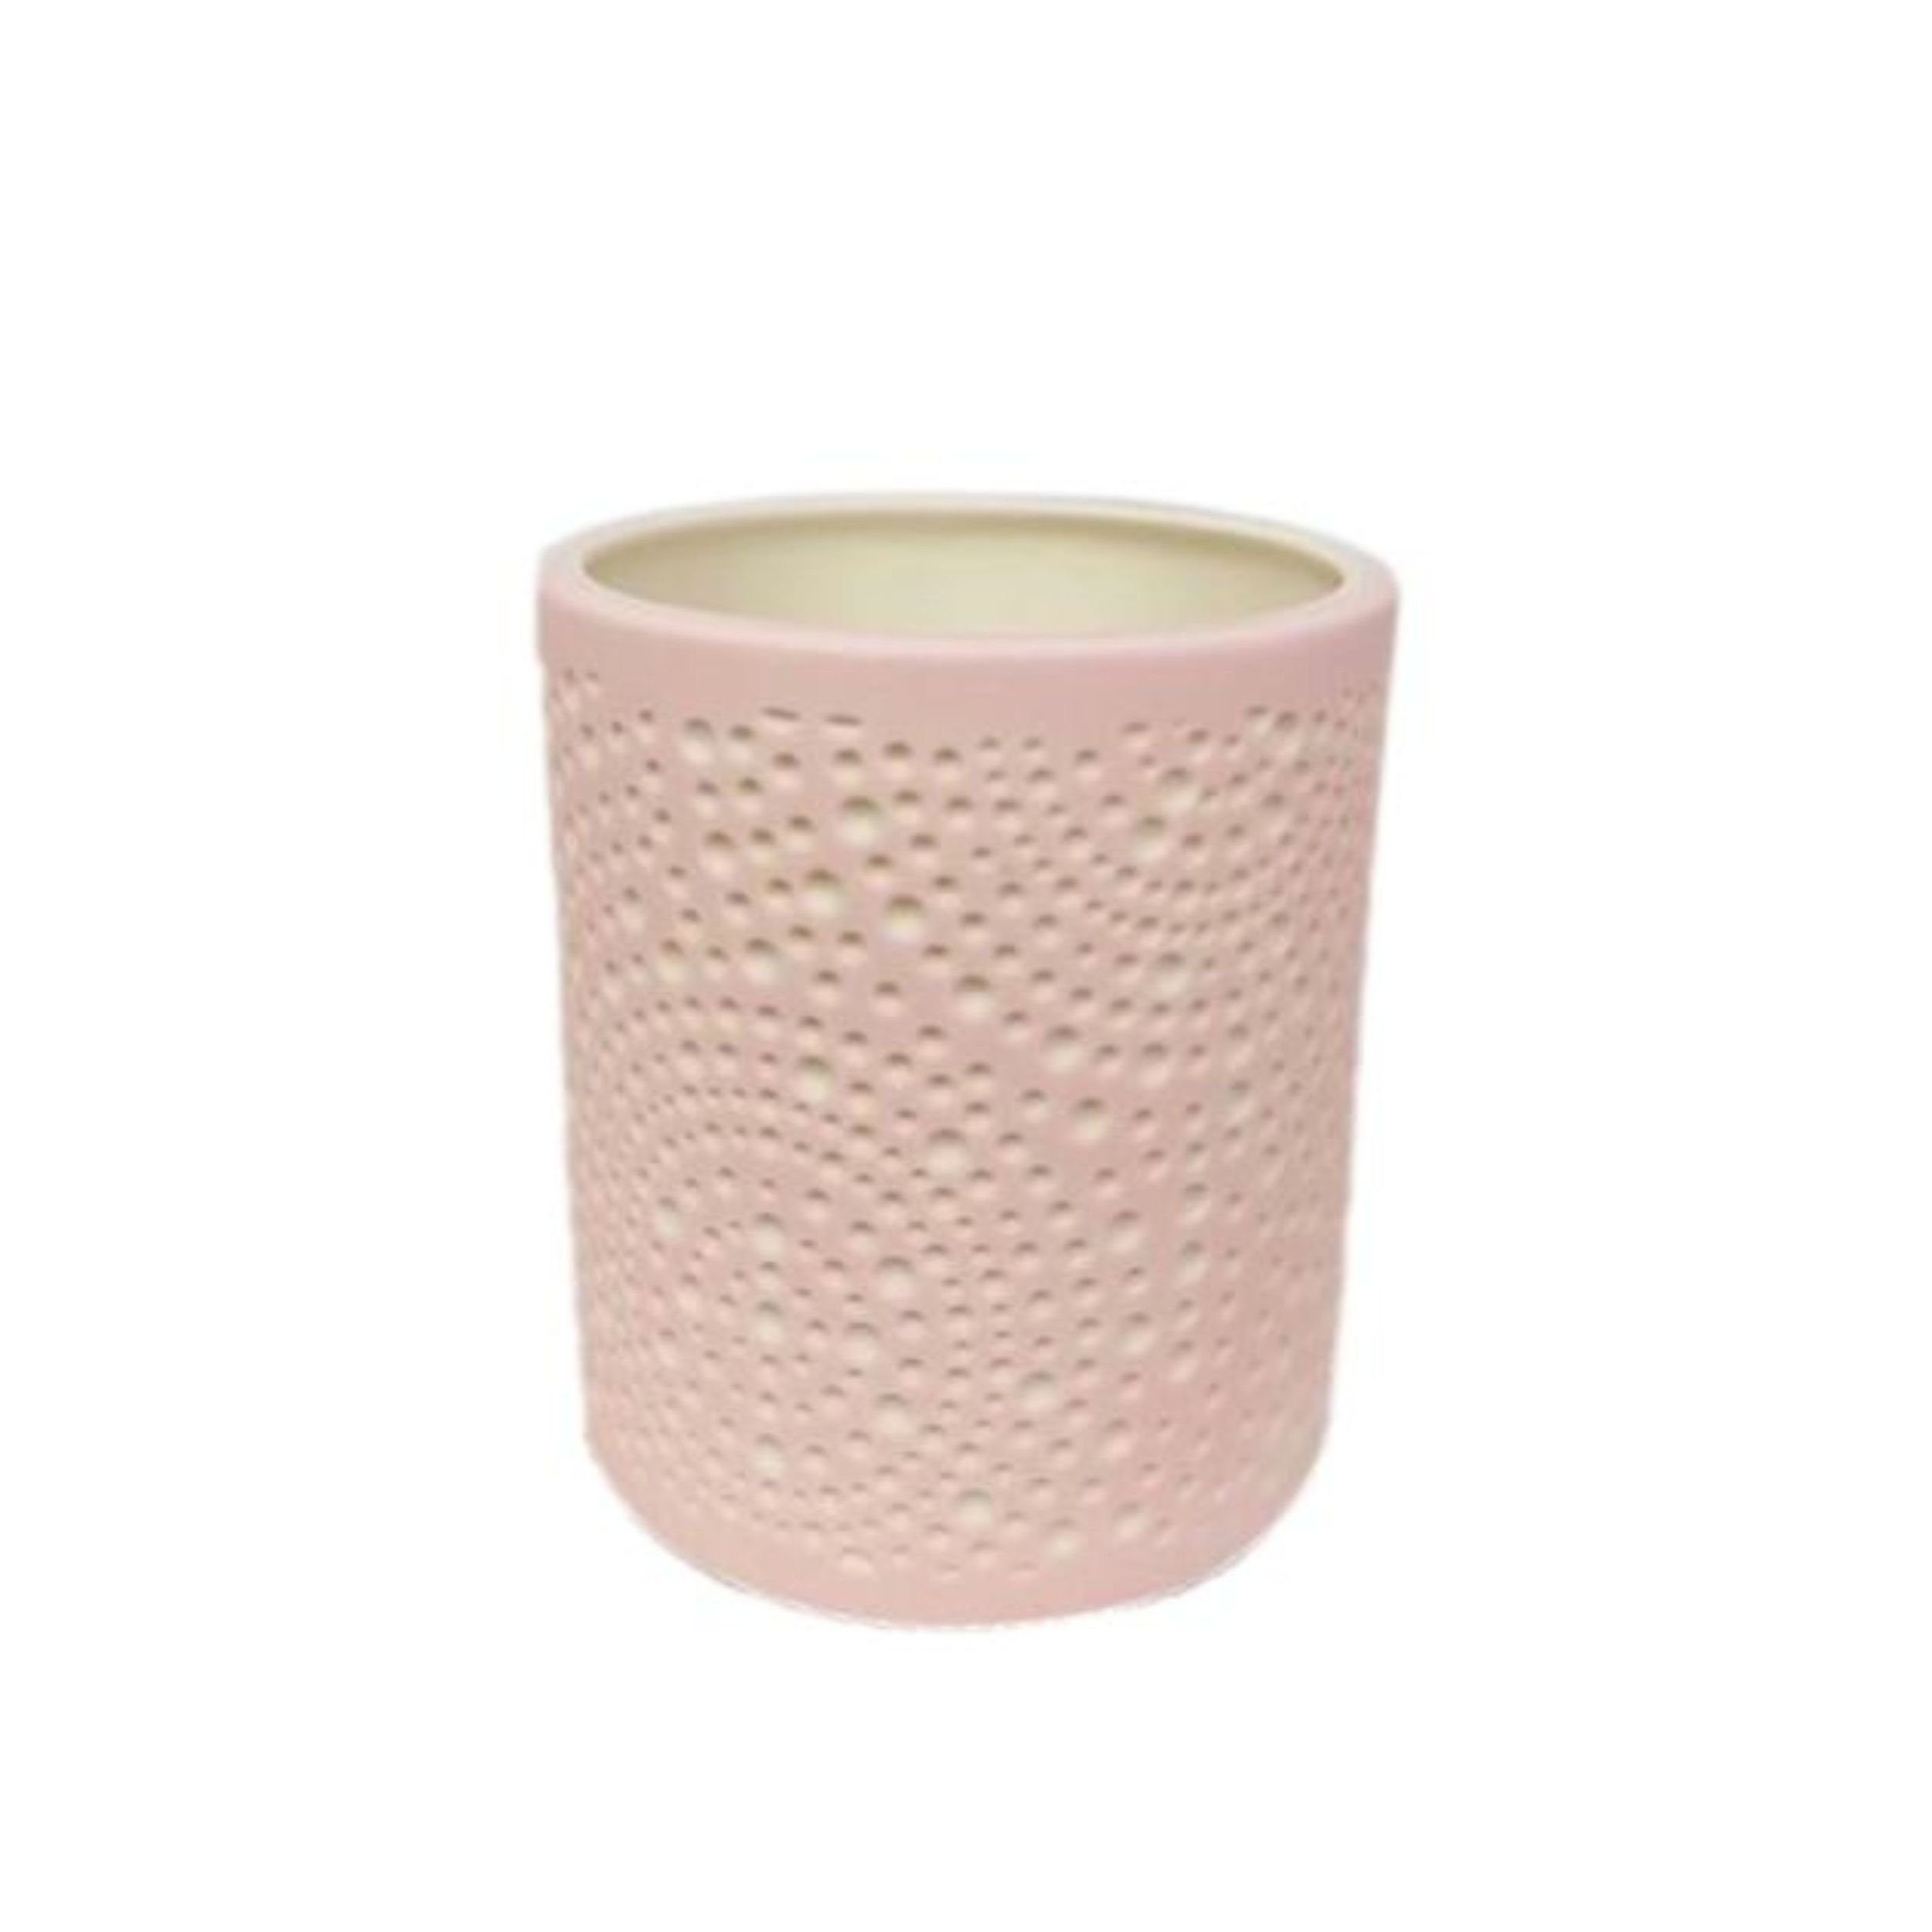 Home Society B.V. Windlicht Porzellan Rosa Teelichthalter 8cm in